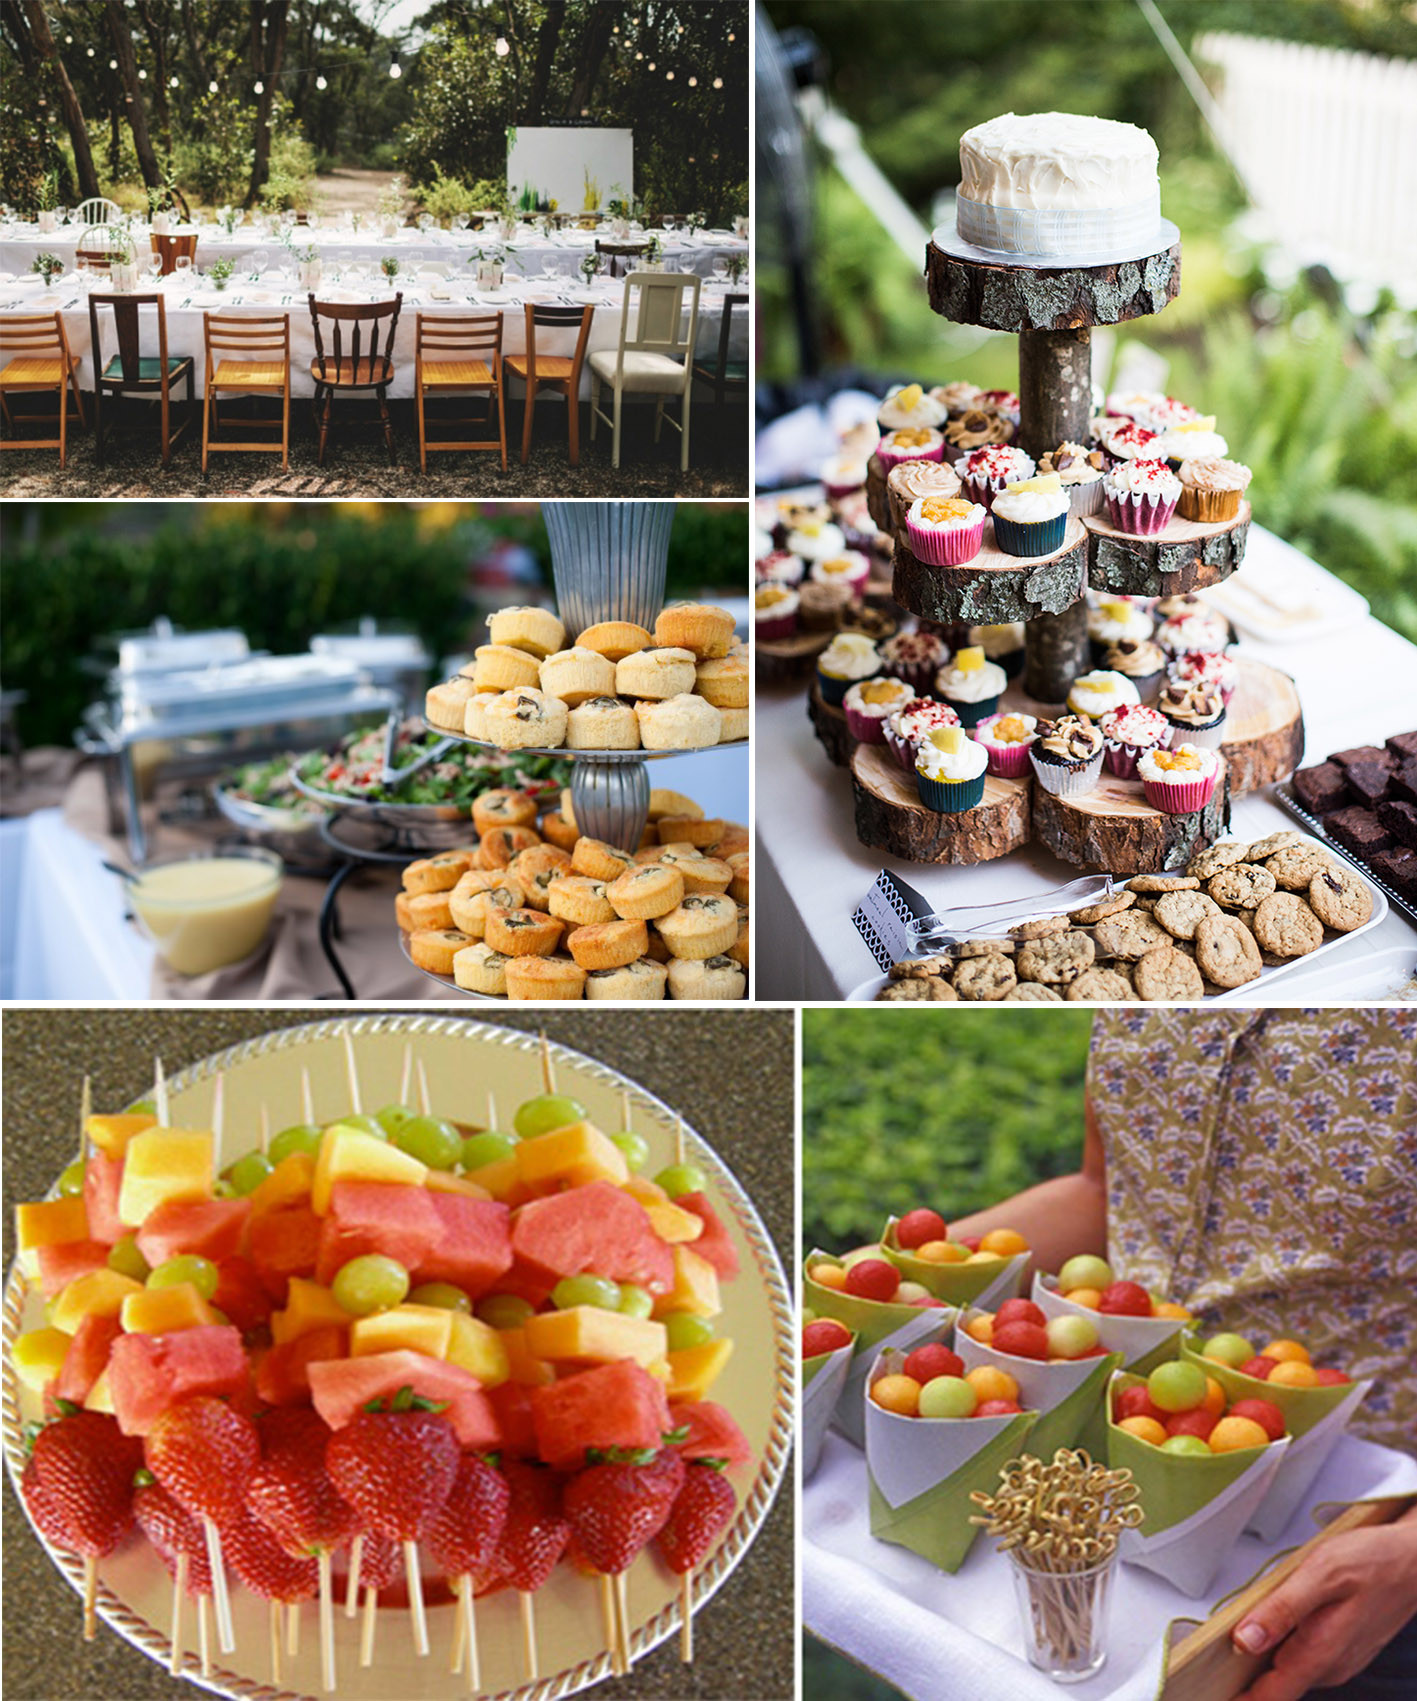 Backyard Party Food Ideas
 How to play a backyard themed wedding – lianggeyuan123